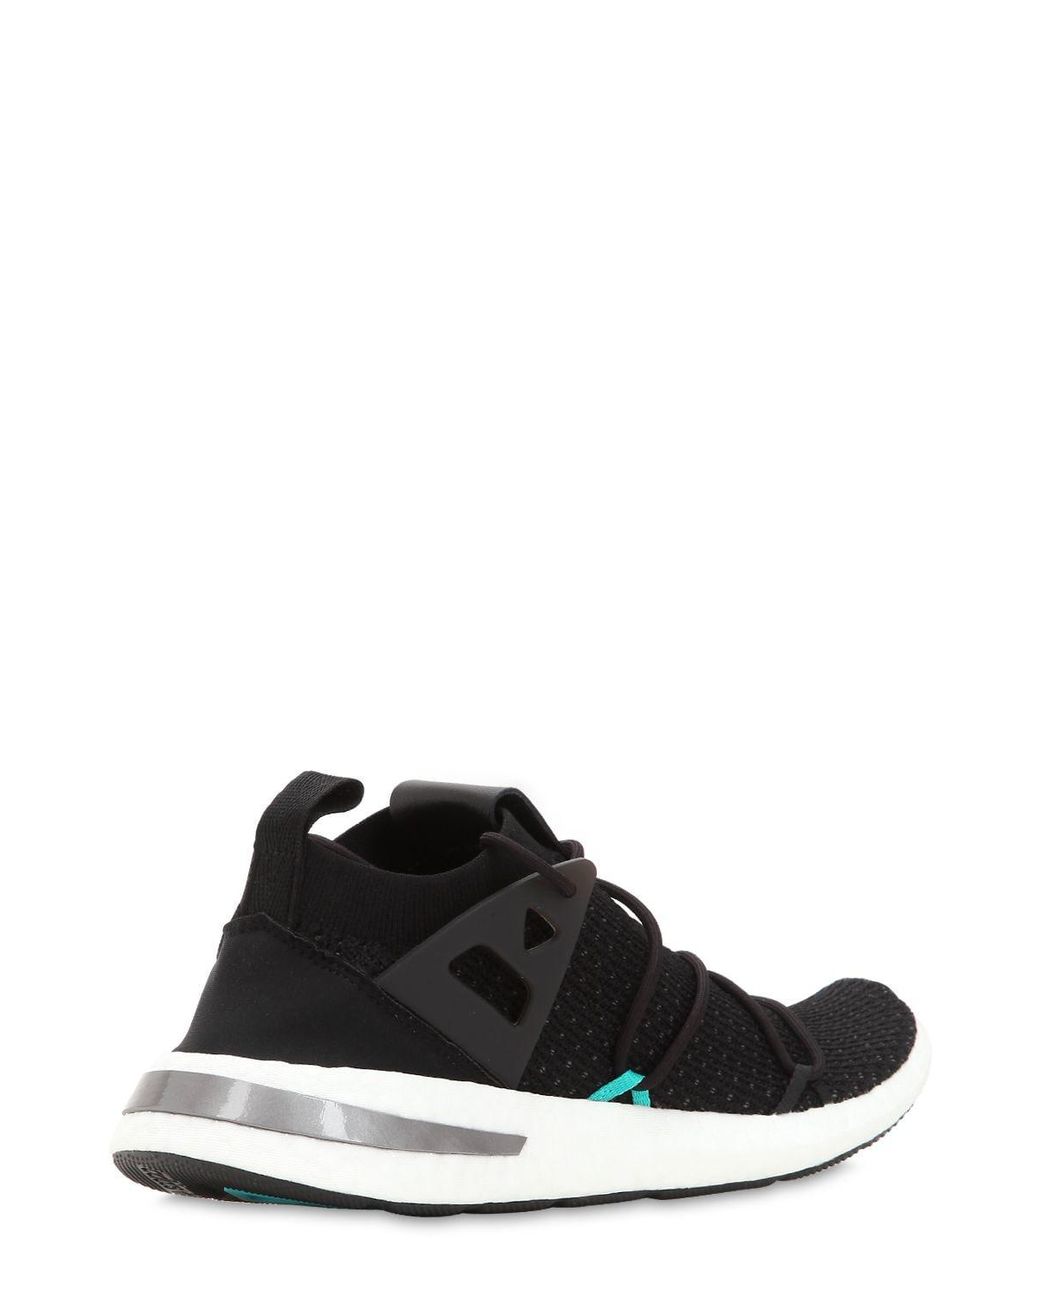 adidas Originals Arkin Primeknit Sneakers in Black | Lyst